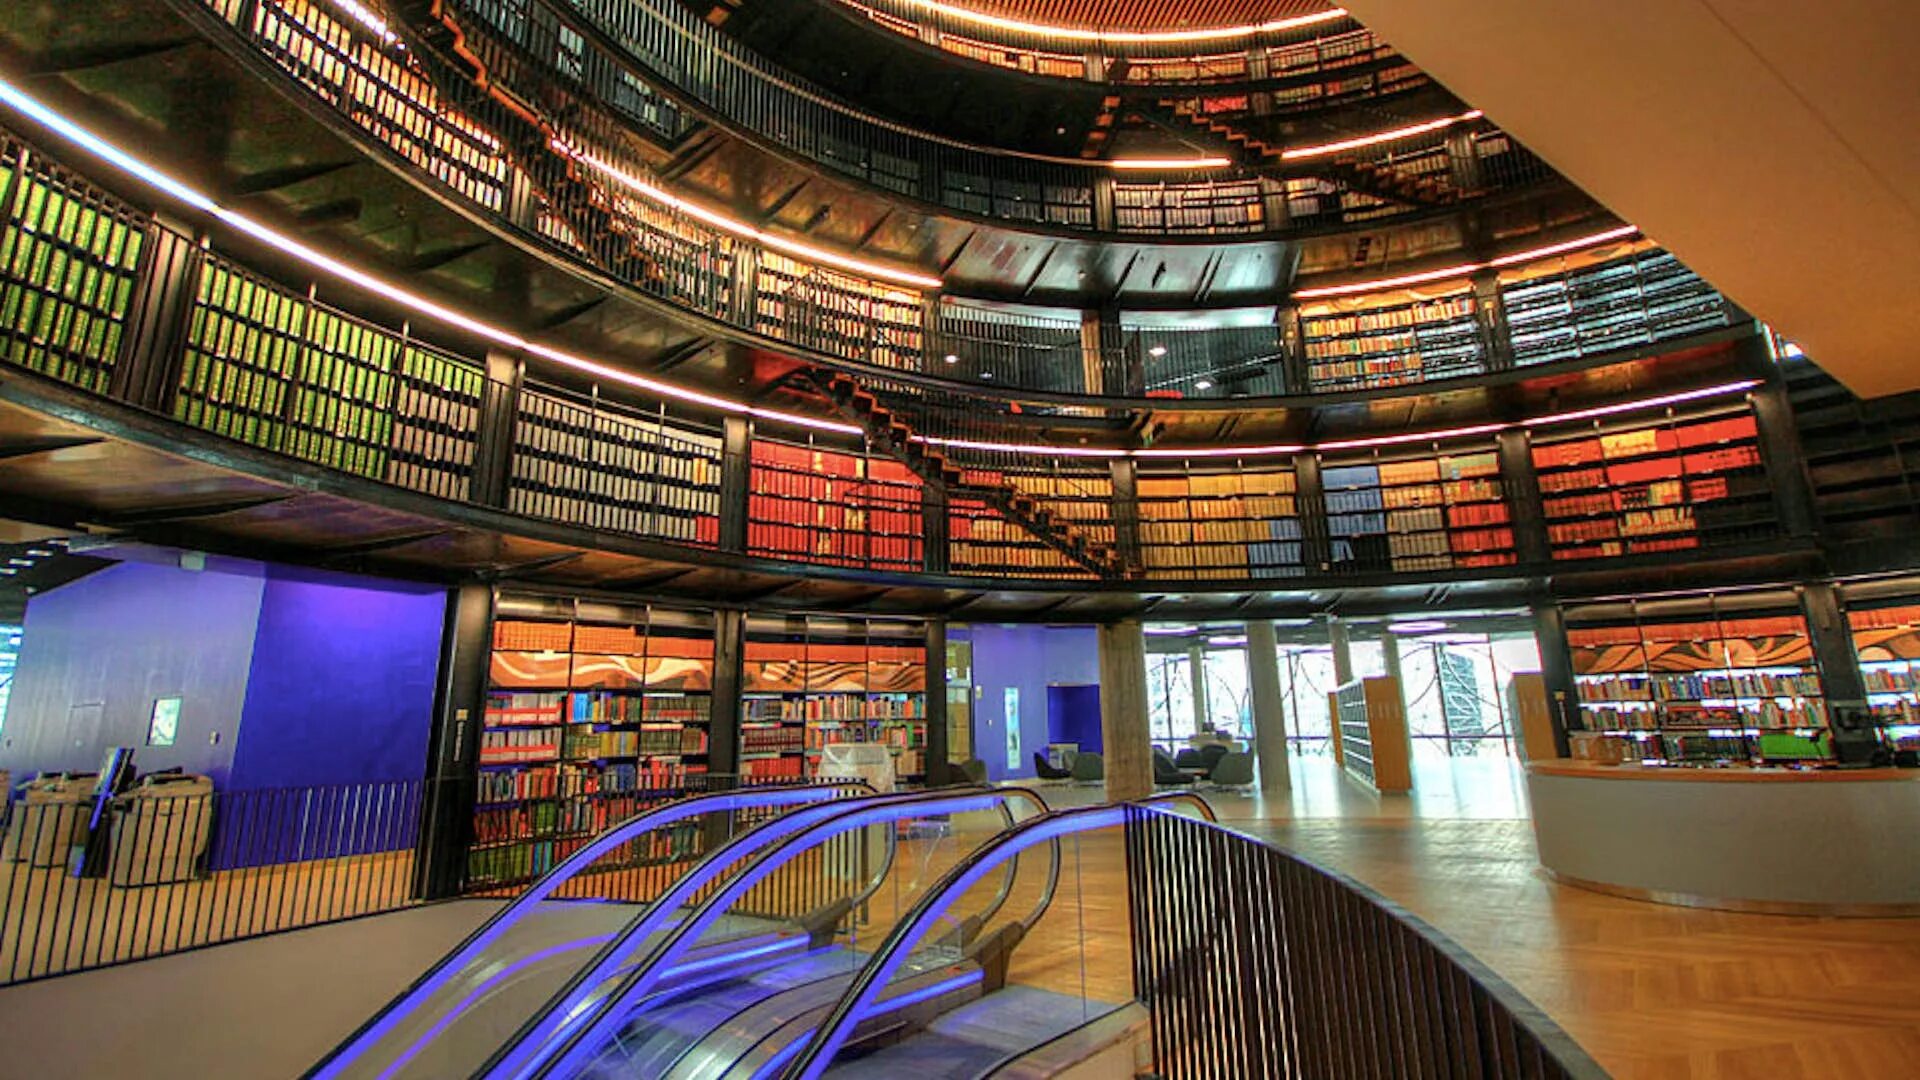 This is our library. Библиотека Бирмингема. Birmingham Central Library Бирмингем. Библиотека Бирмингема в Великобритании. Новая библиотека в Бирмингеме.